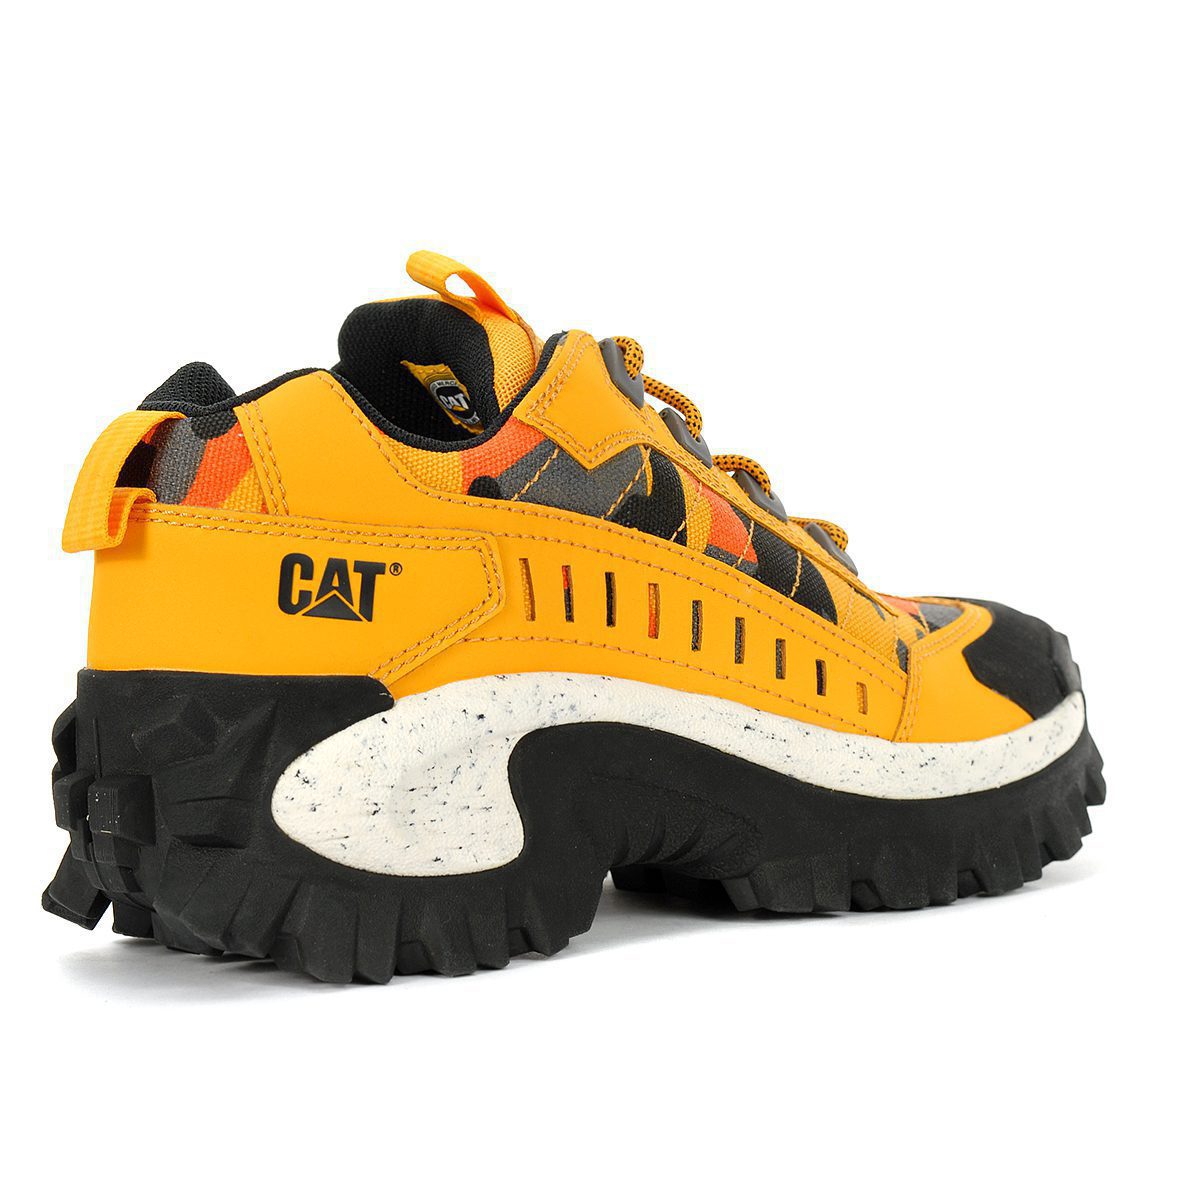 cat intruder shoe